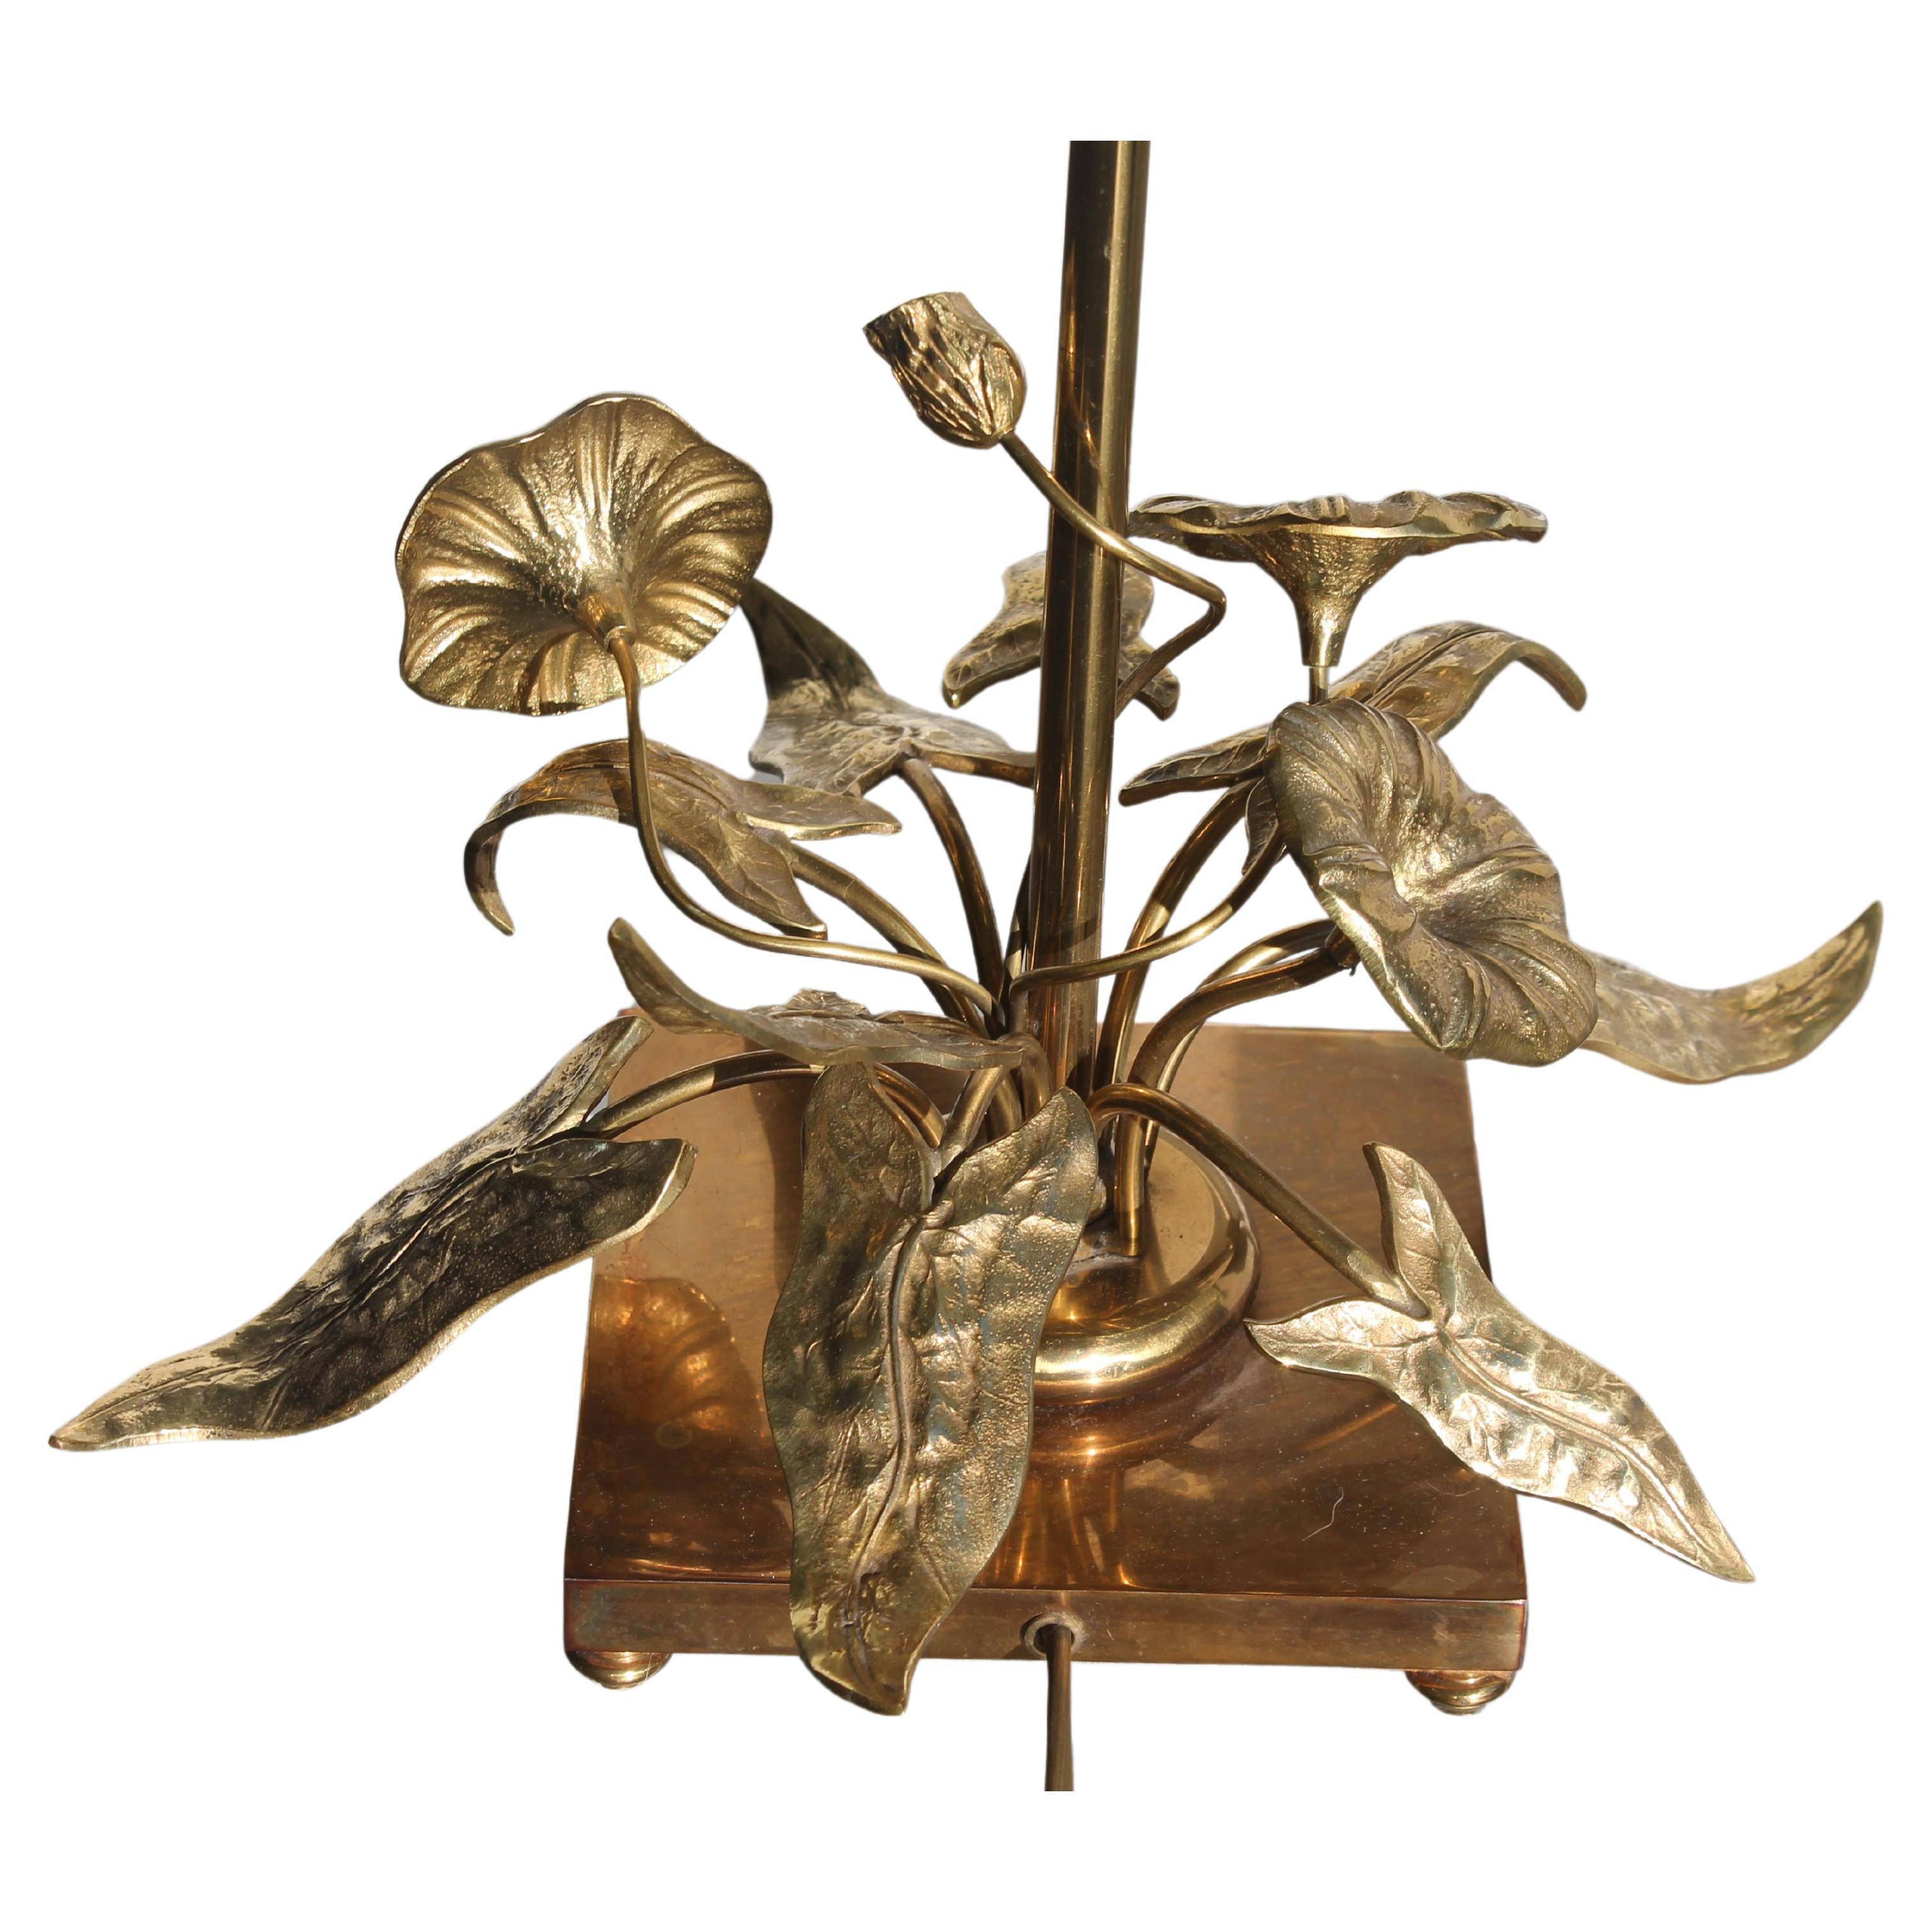 1960s French Mid Century Modern Gilt Bronze FloralTable Lamp att. Maison Charles For Sale